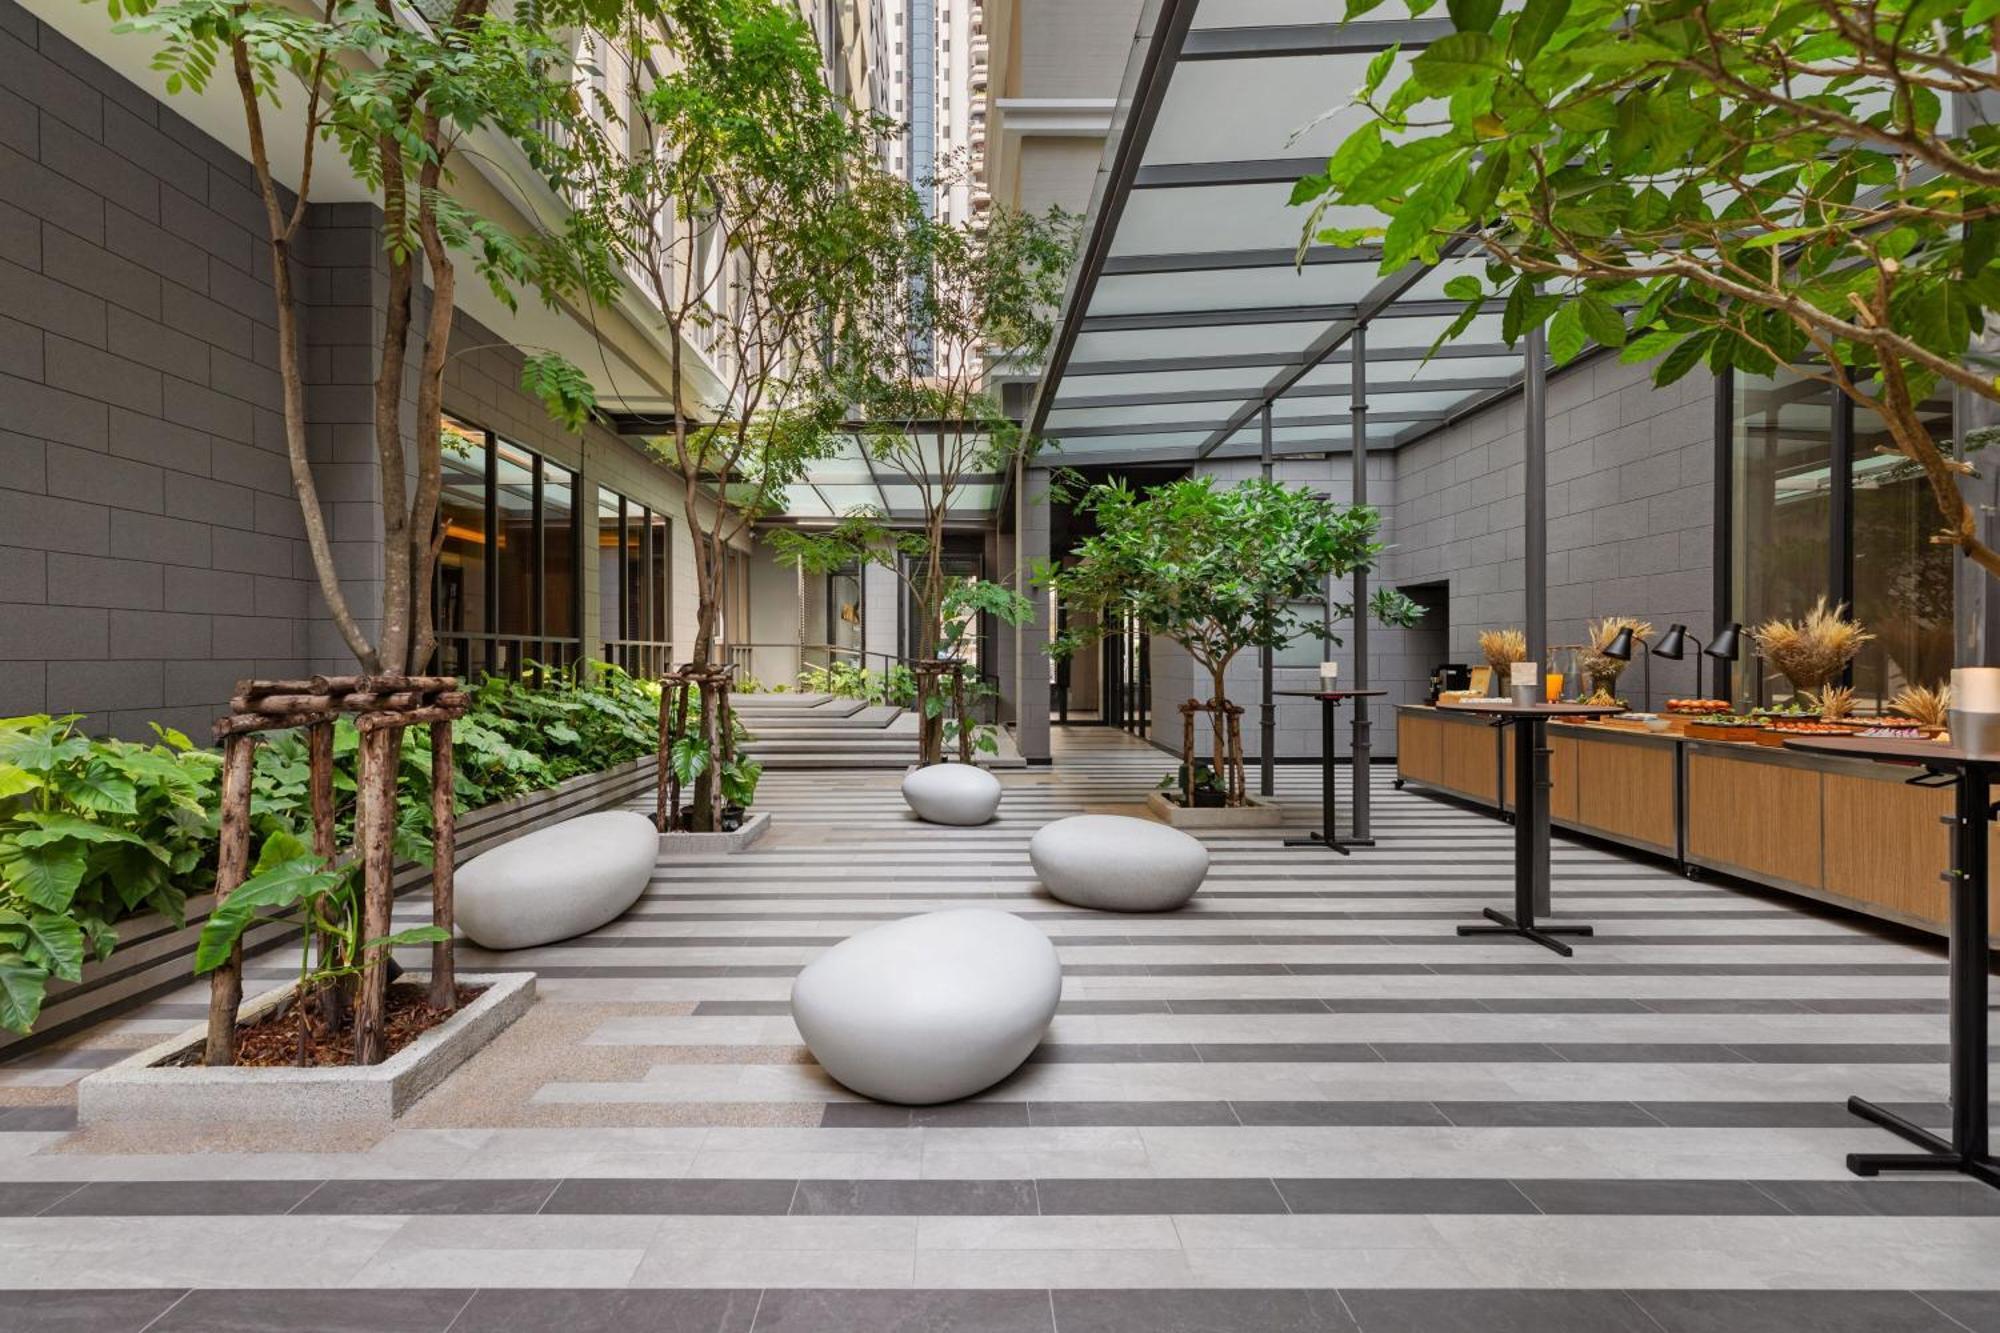 Отель Courtyard By Marriott Bangkok Sukhumvit 20 Экстерьер фото